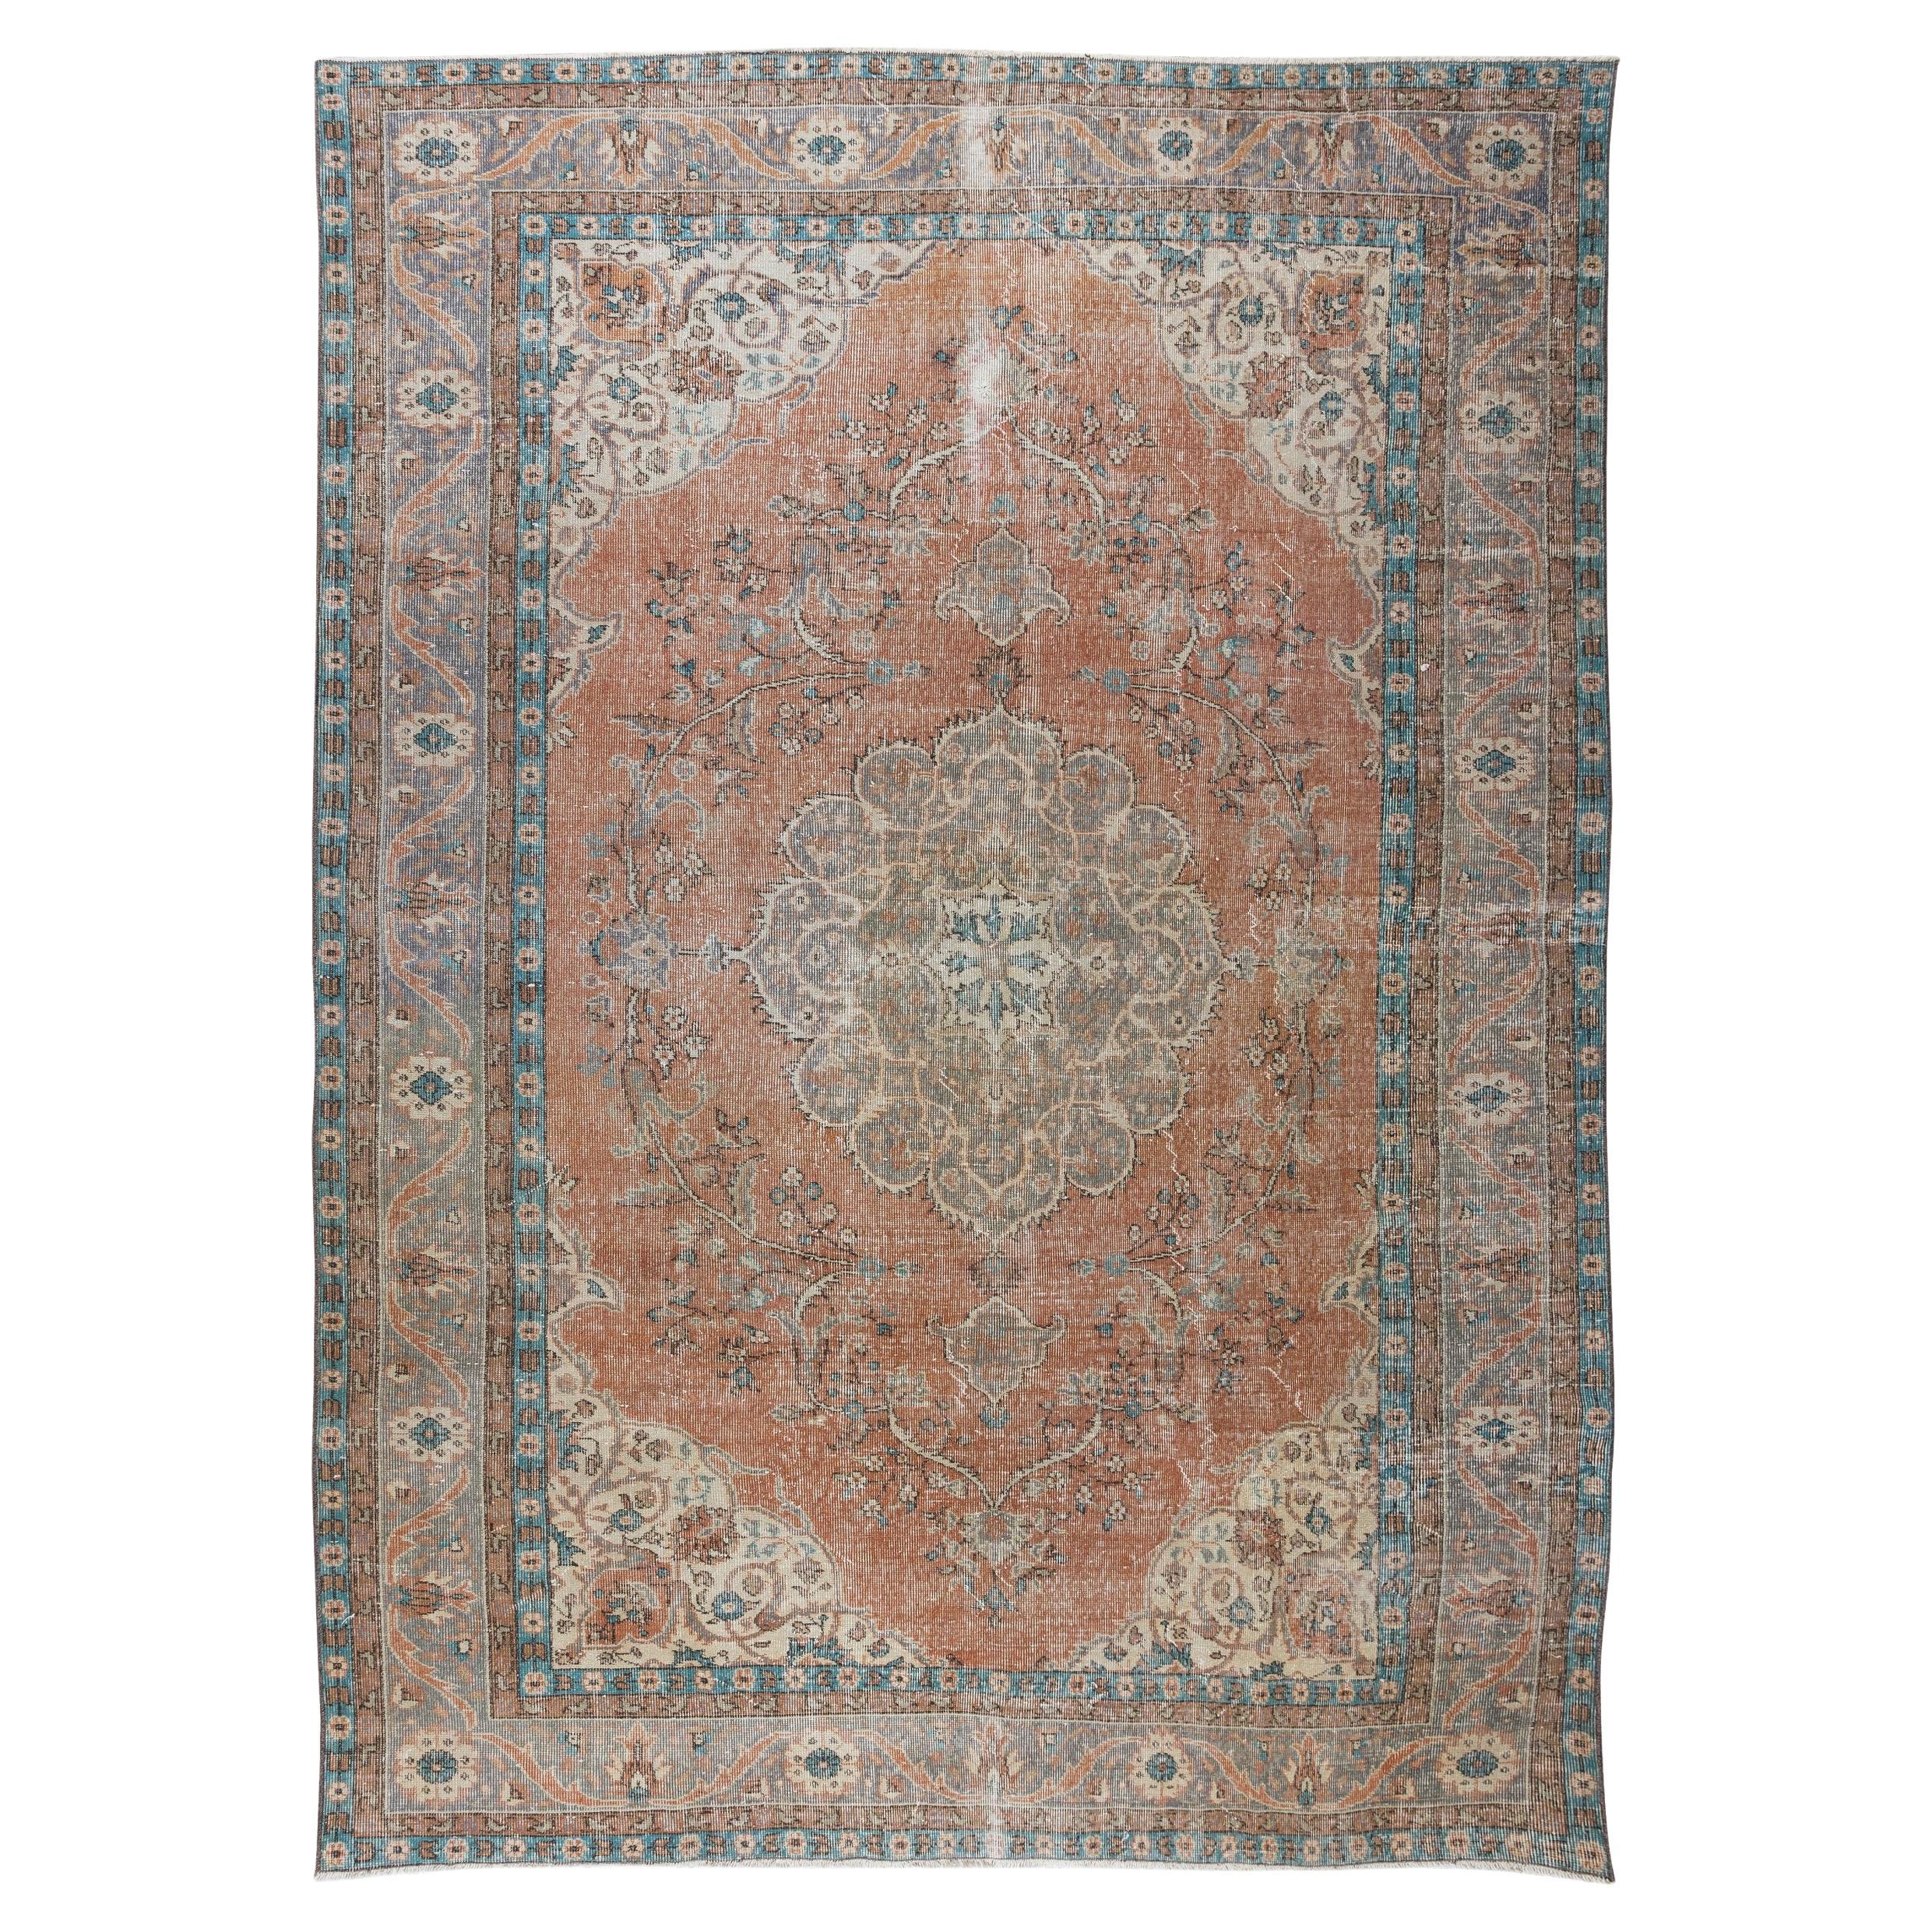 One-of-a-kind Turkish Old Rug, Traditional Handmade Vintage Carpet